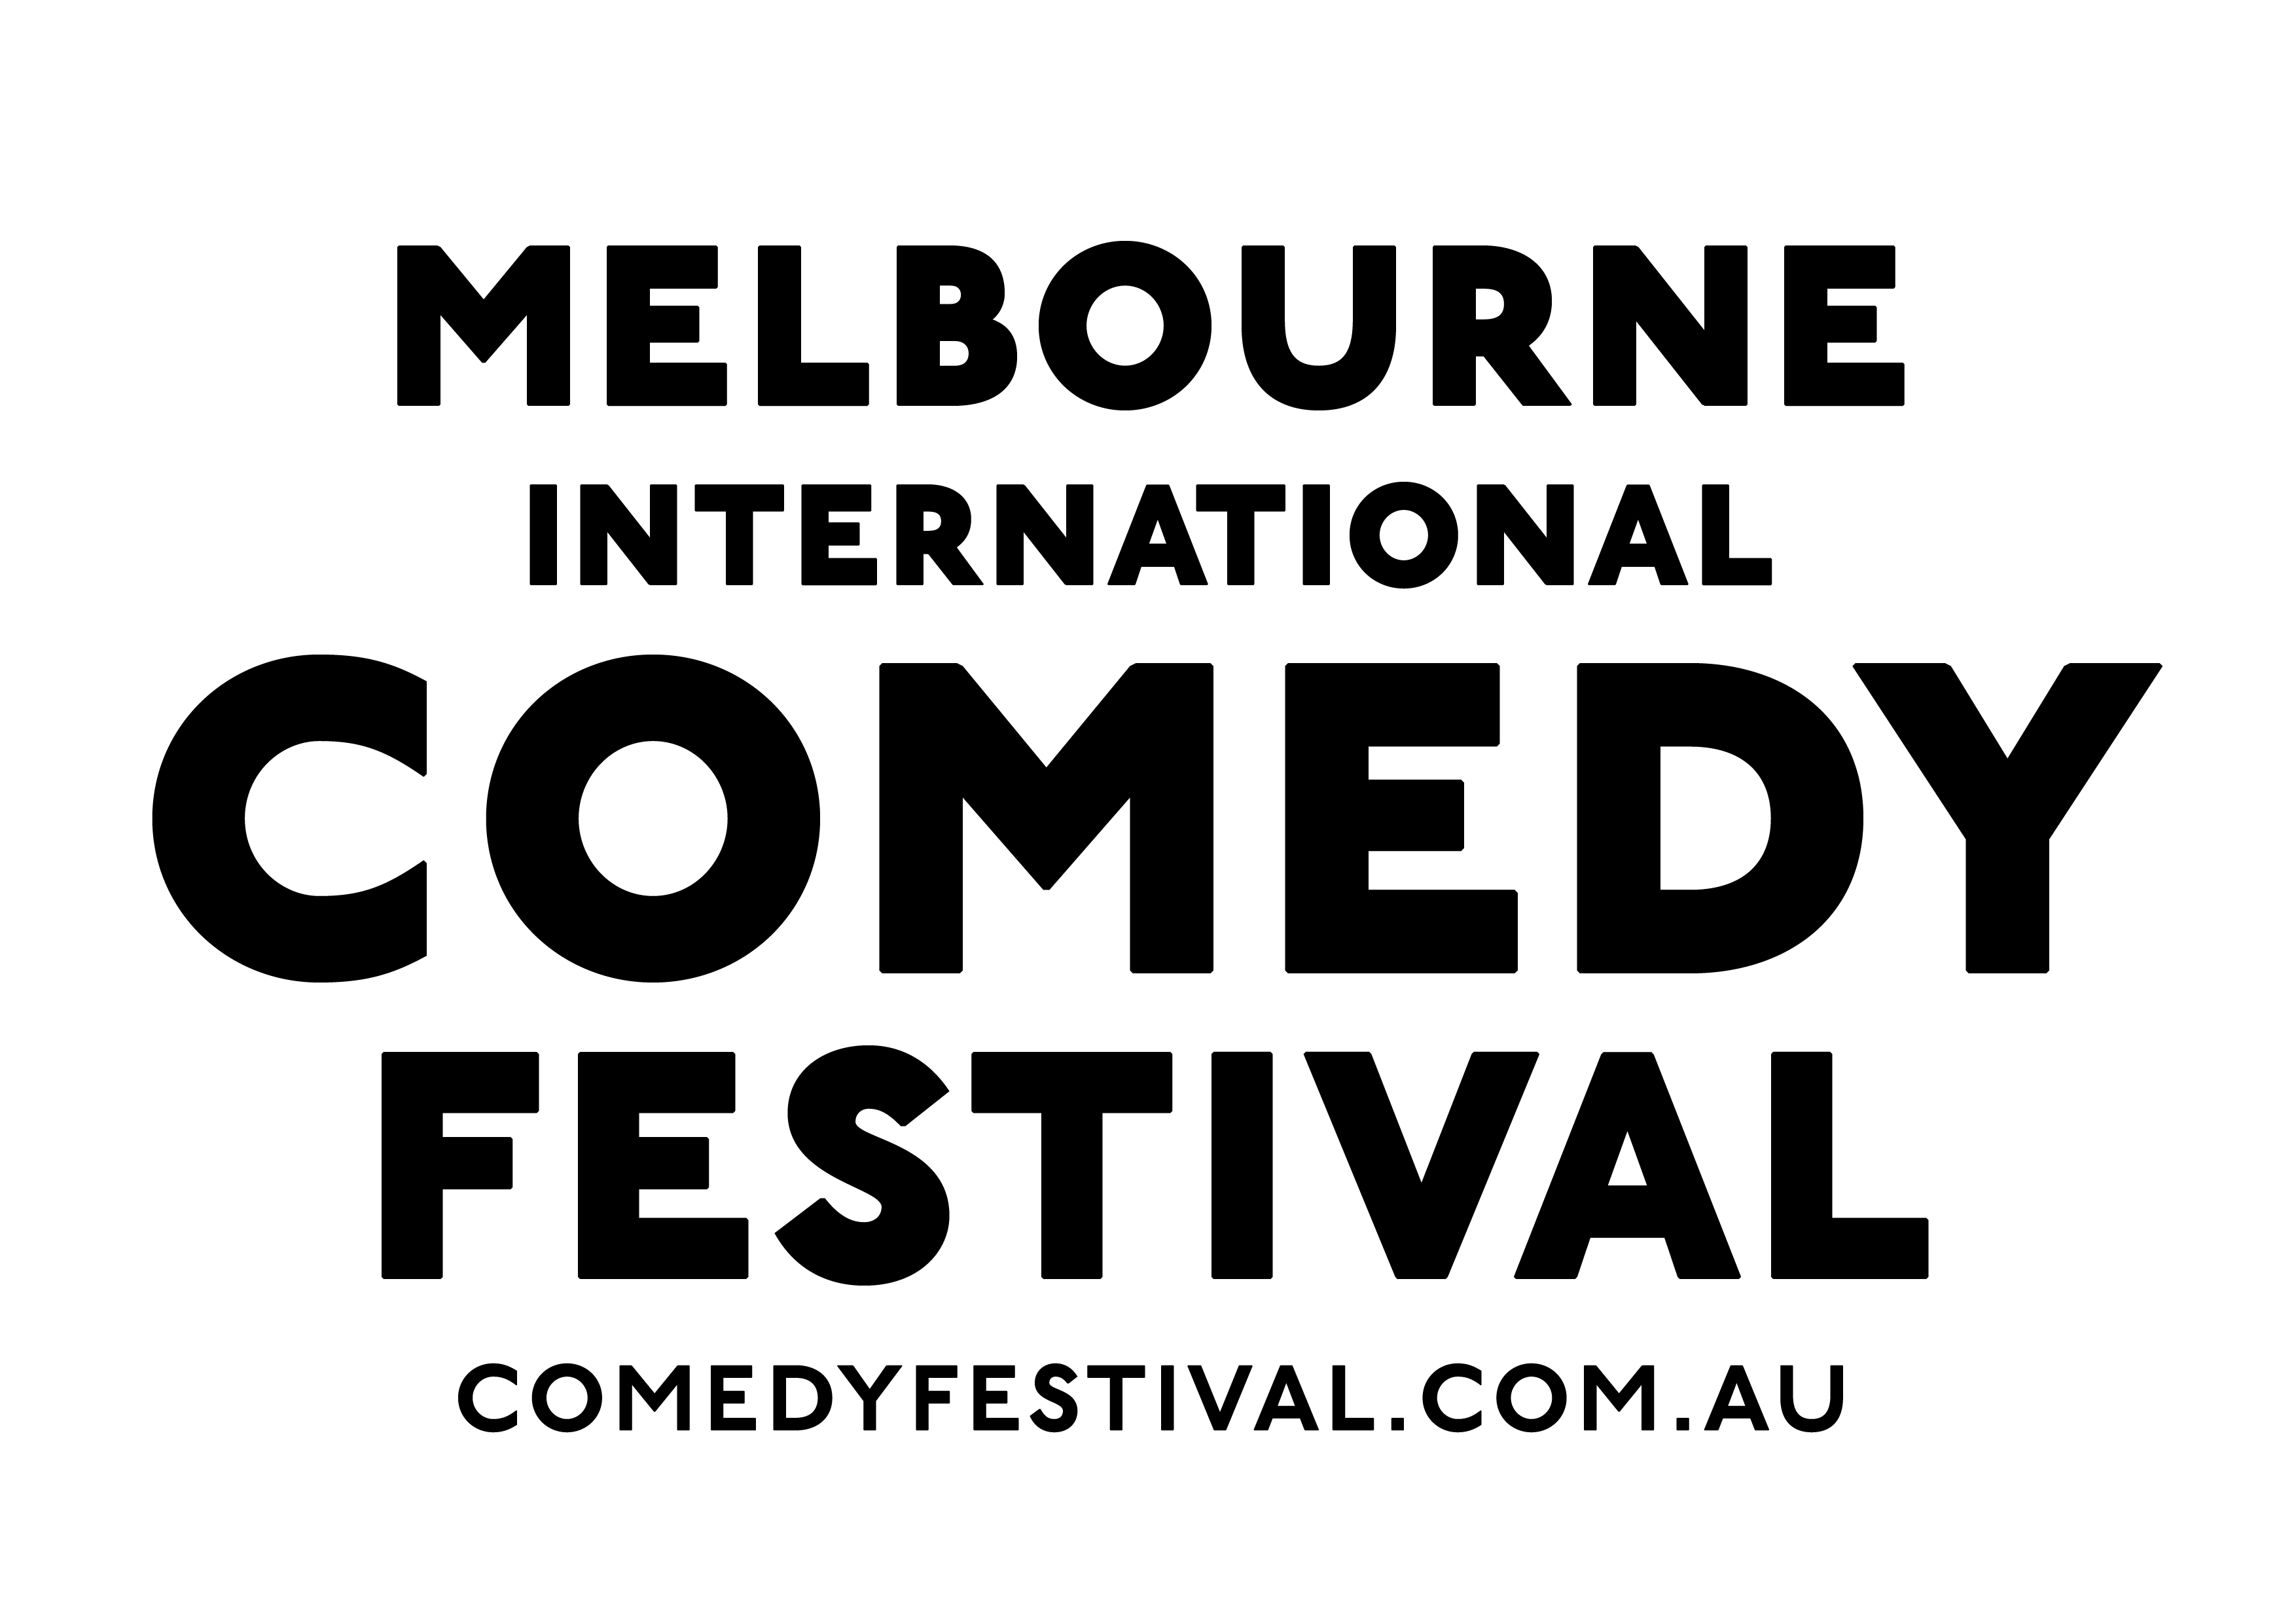 MICF Corporate logo.png